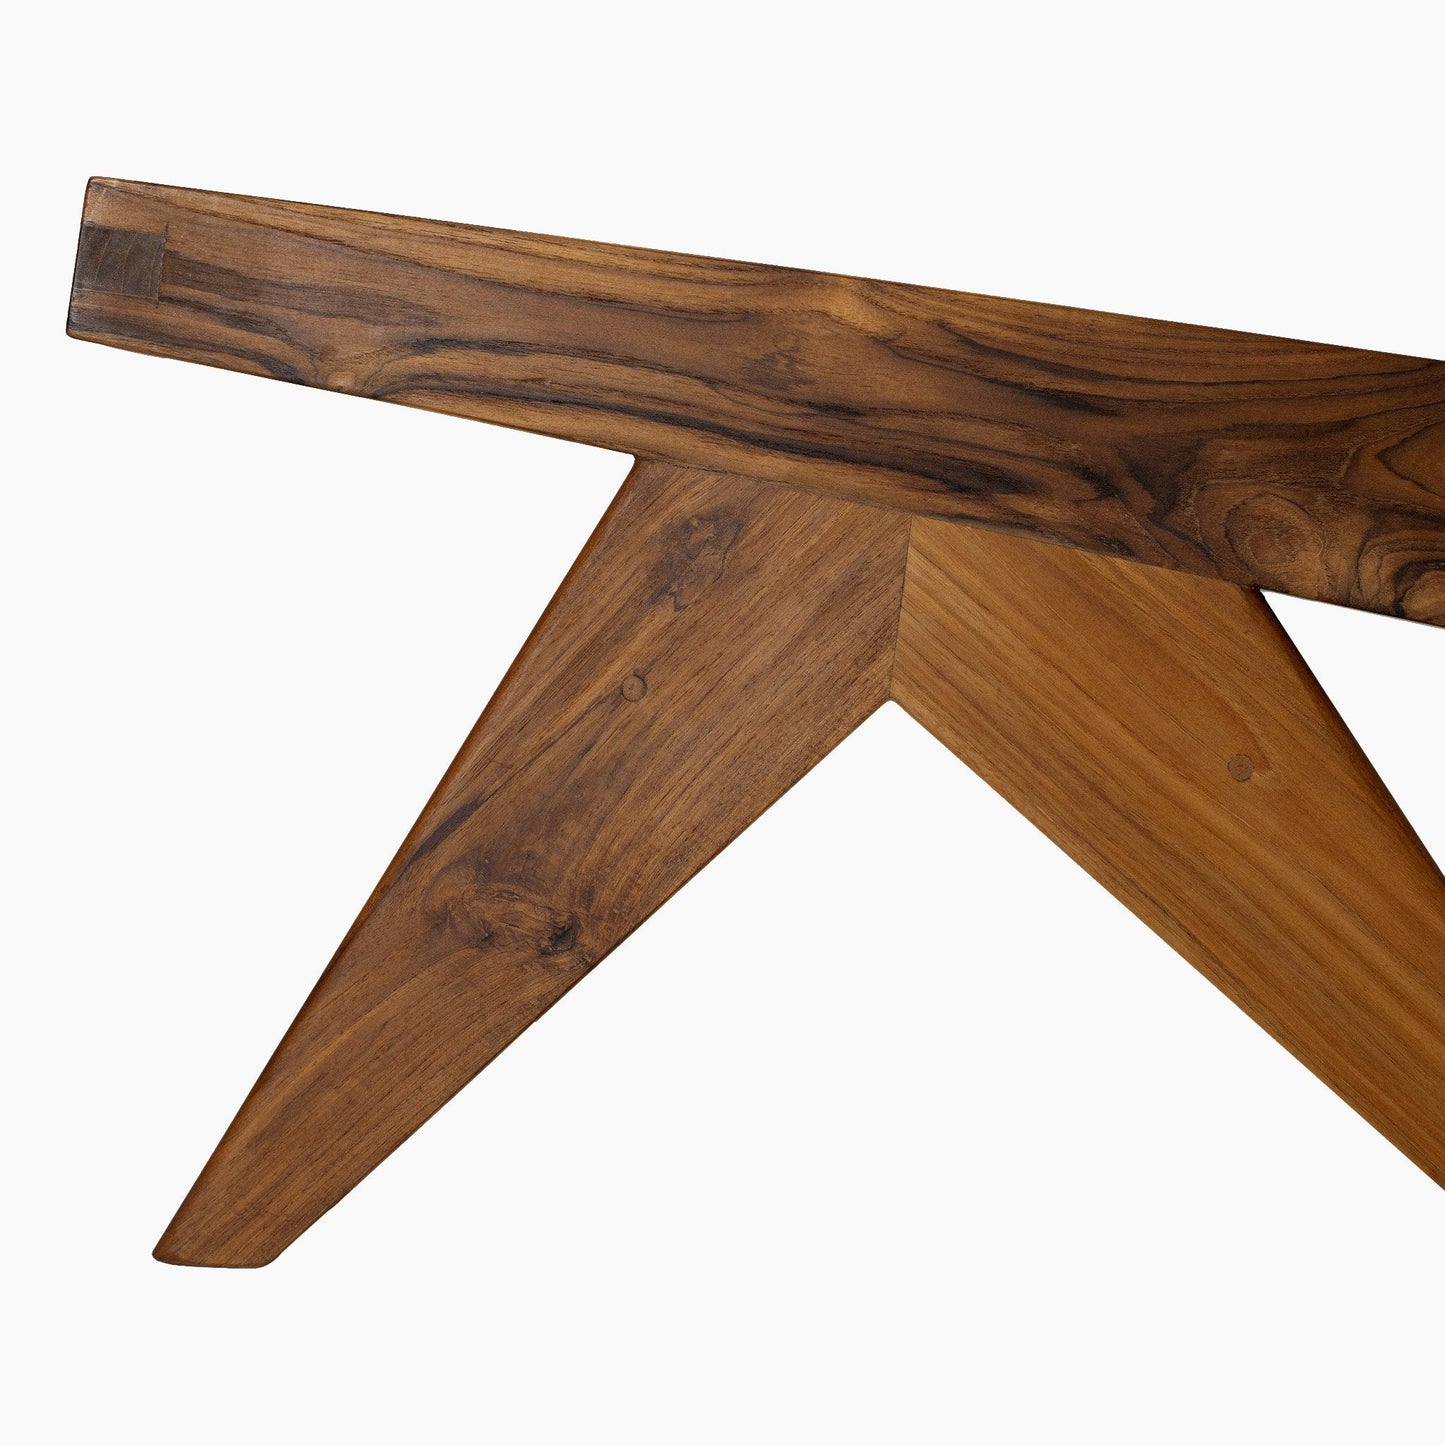 Jeanneret Armless Easy Lounge Chair - Brown - Floor Model - Grade C